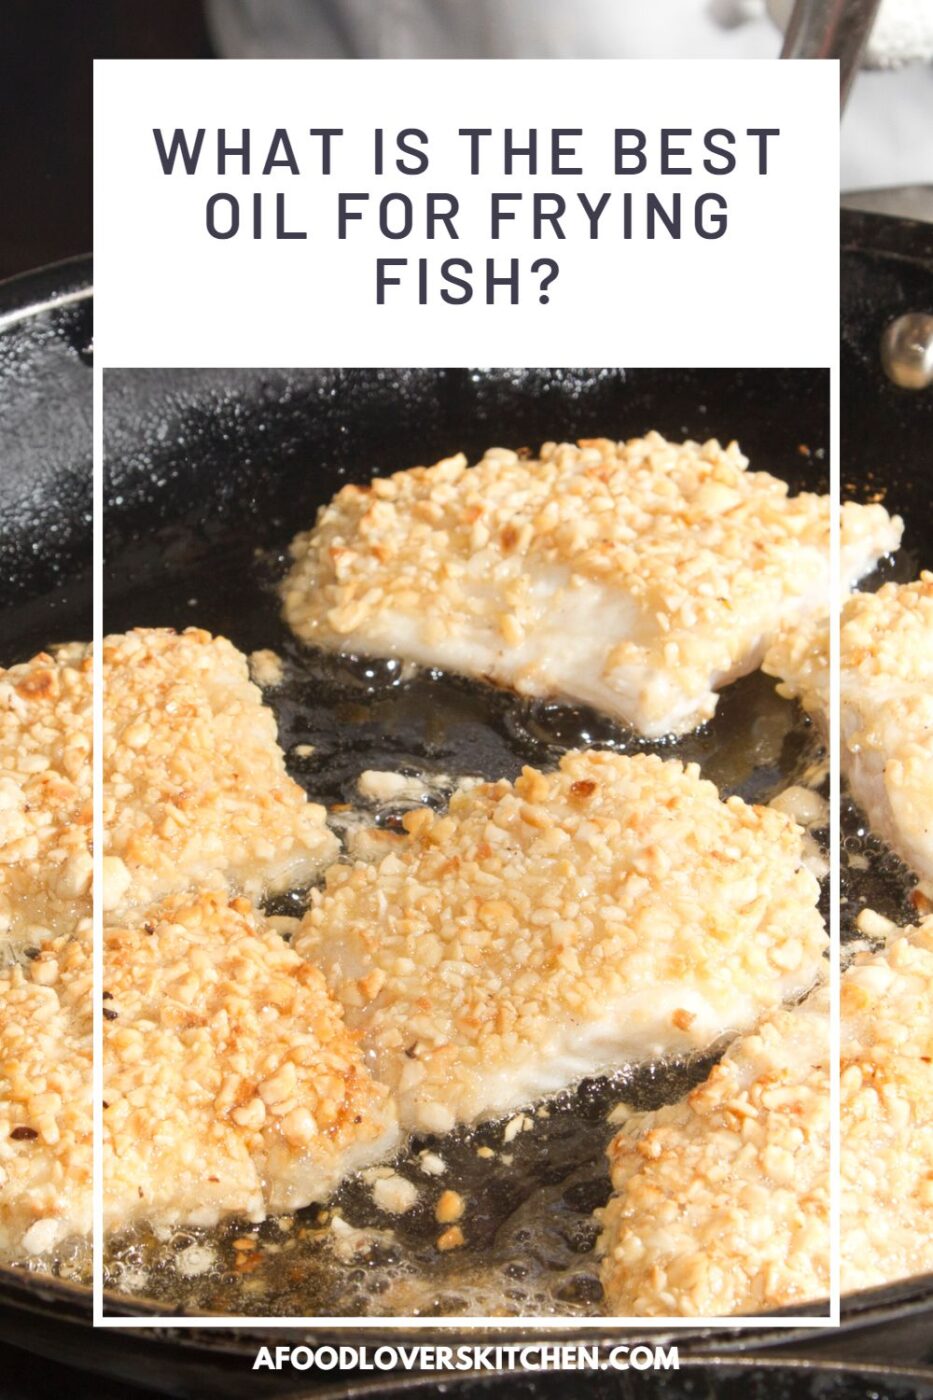 Fish frying in a pan